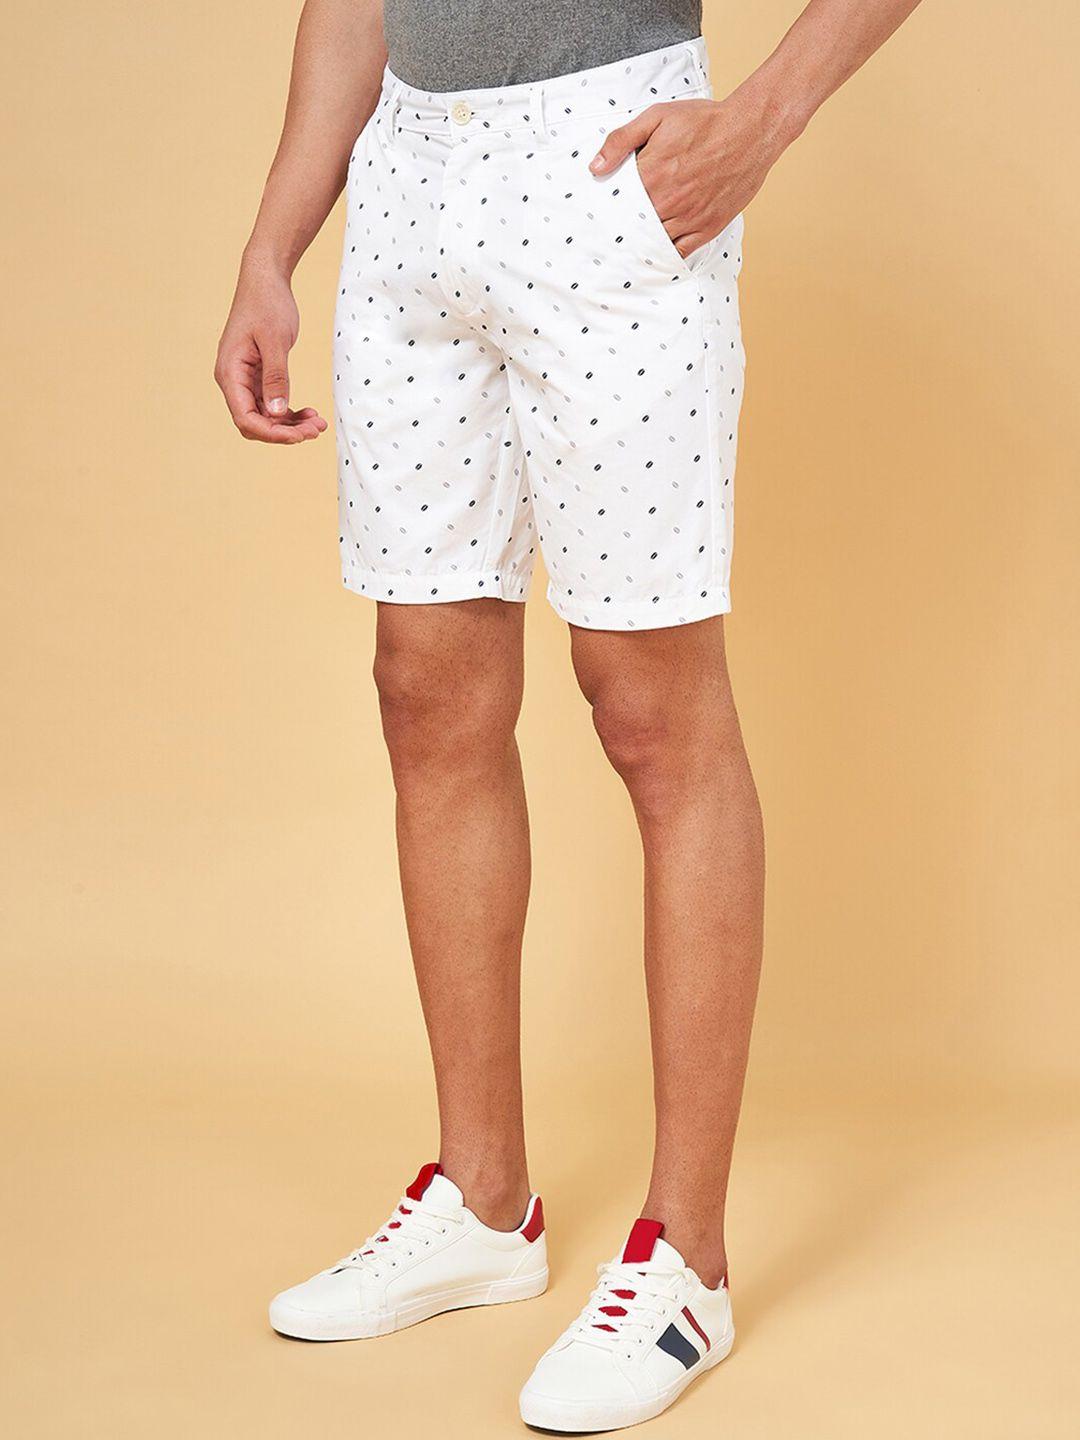 byford-by-pantaloons-men-mid-rise-conversational-printed-slim-fit-shorts